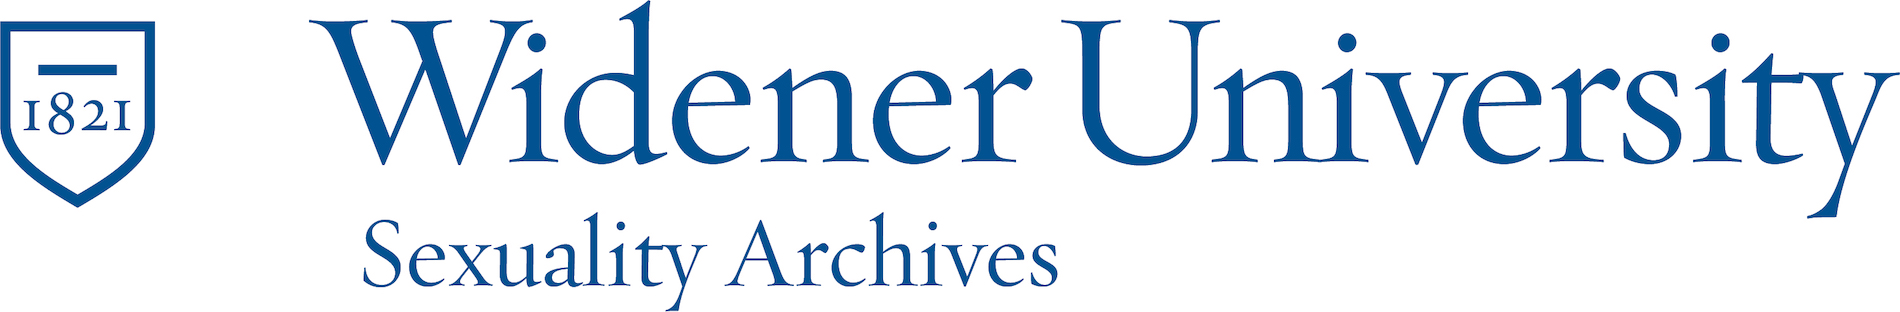 Widener University Sexuality Archives